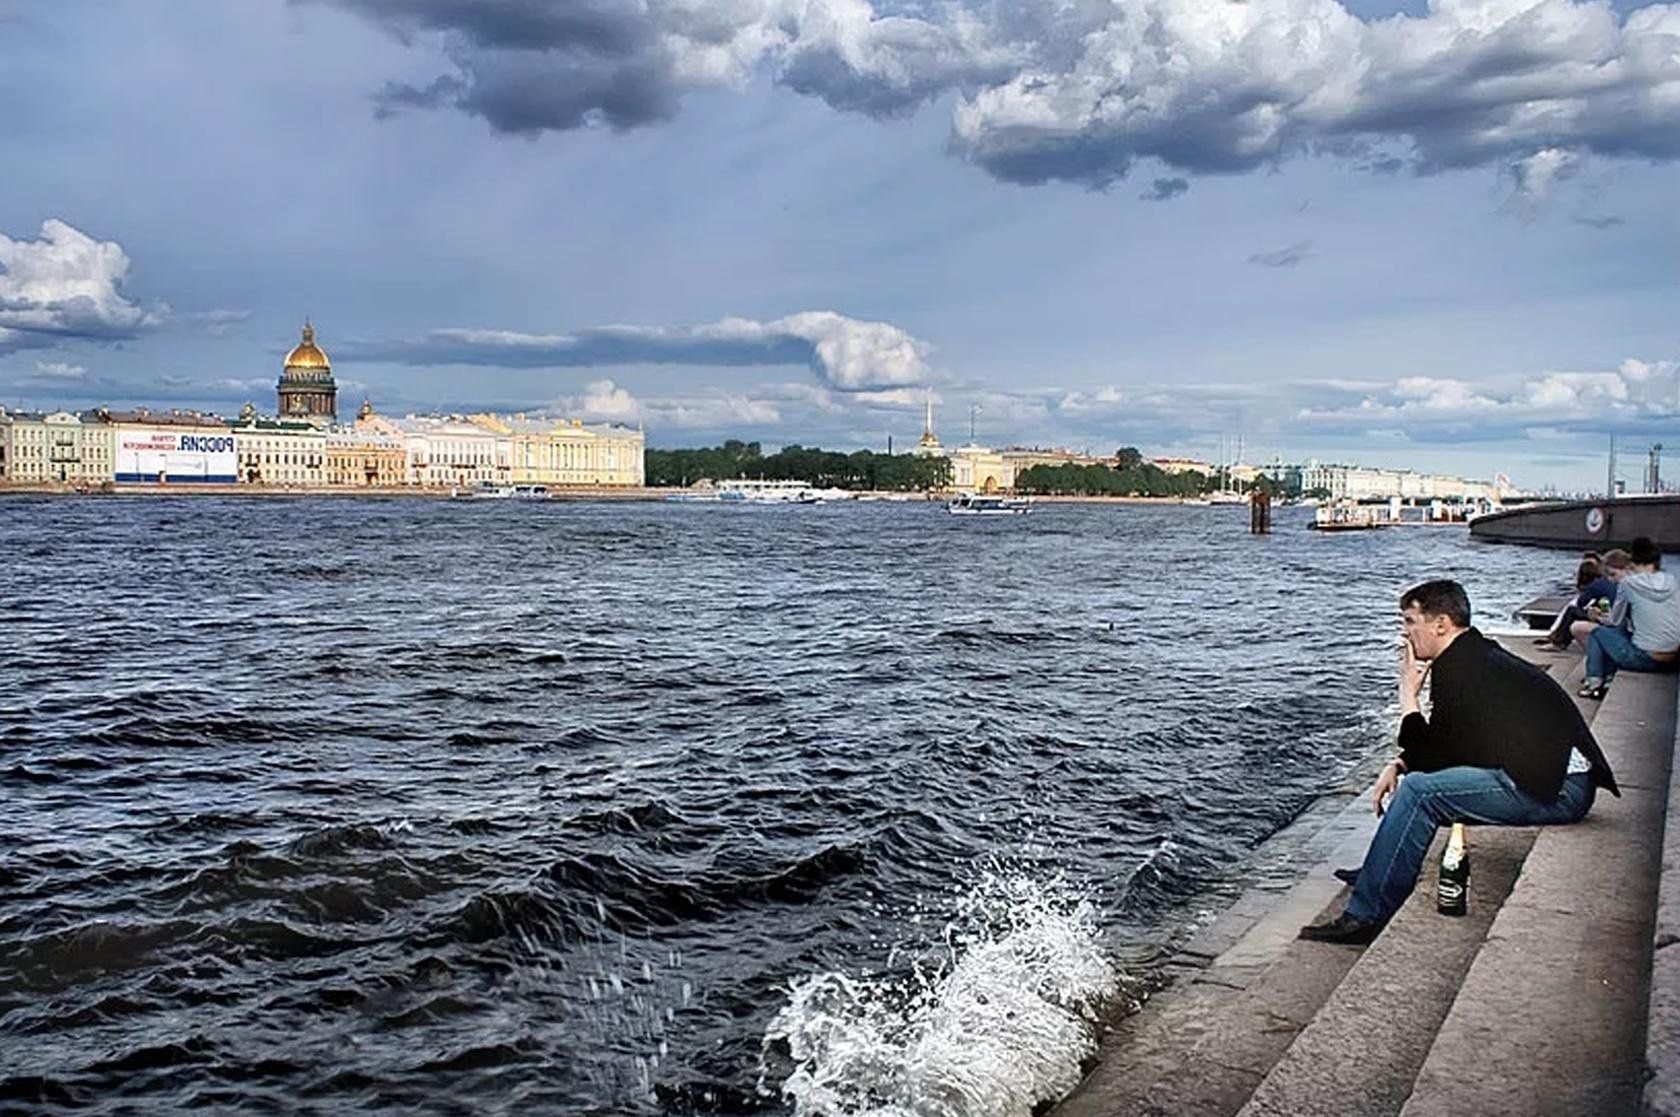 Петербург расположен на реке неве. Набережная реки Невы. Петербург берег Невы.